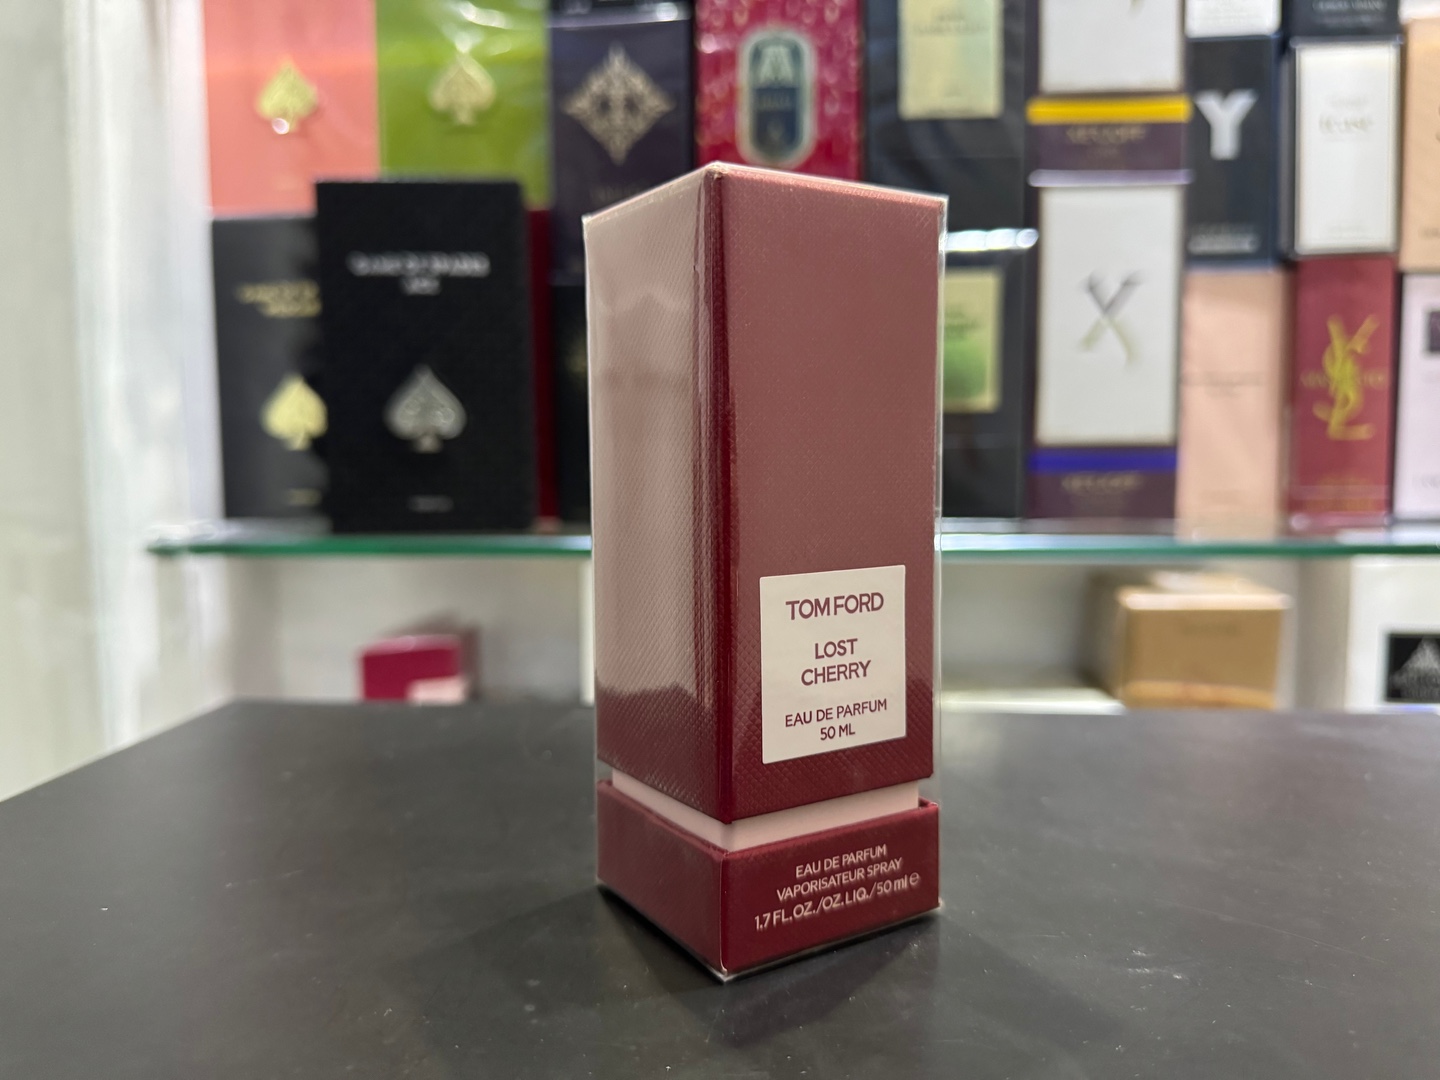 joyas, relojes y accesorios - Perfume Tom Ford Lost Cherry 50ML Edp Nuevo, Original RD$ 12,995 NEG 0